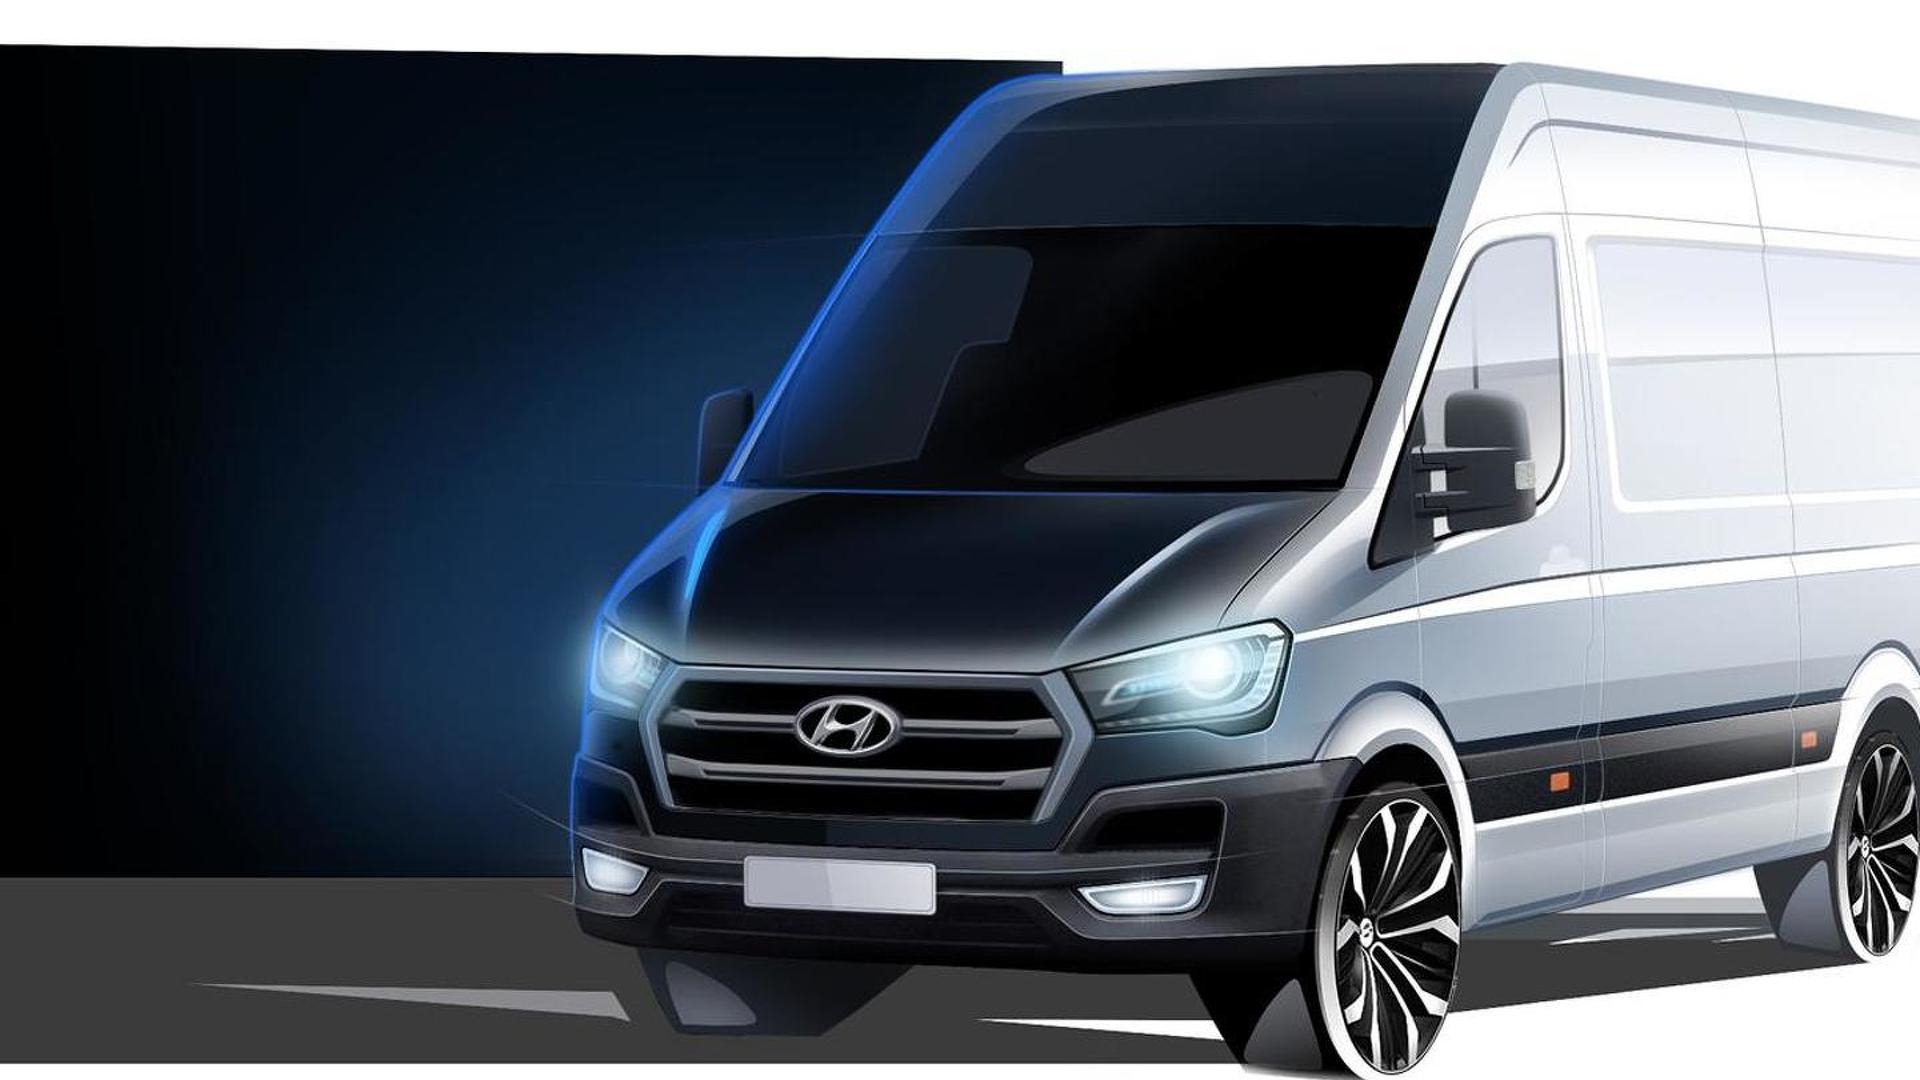 Hyundai H350 Cargo Van Teased Ahead Of September Full Reveal